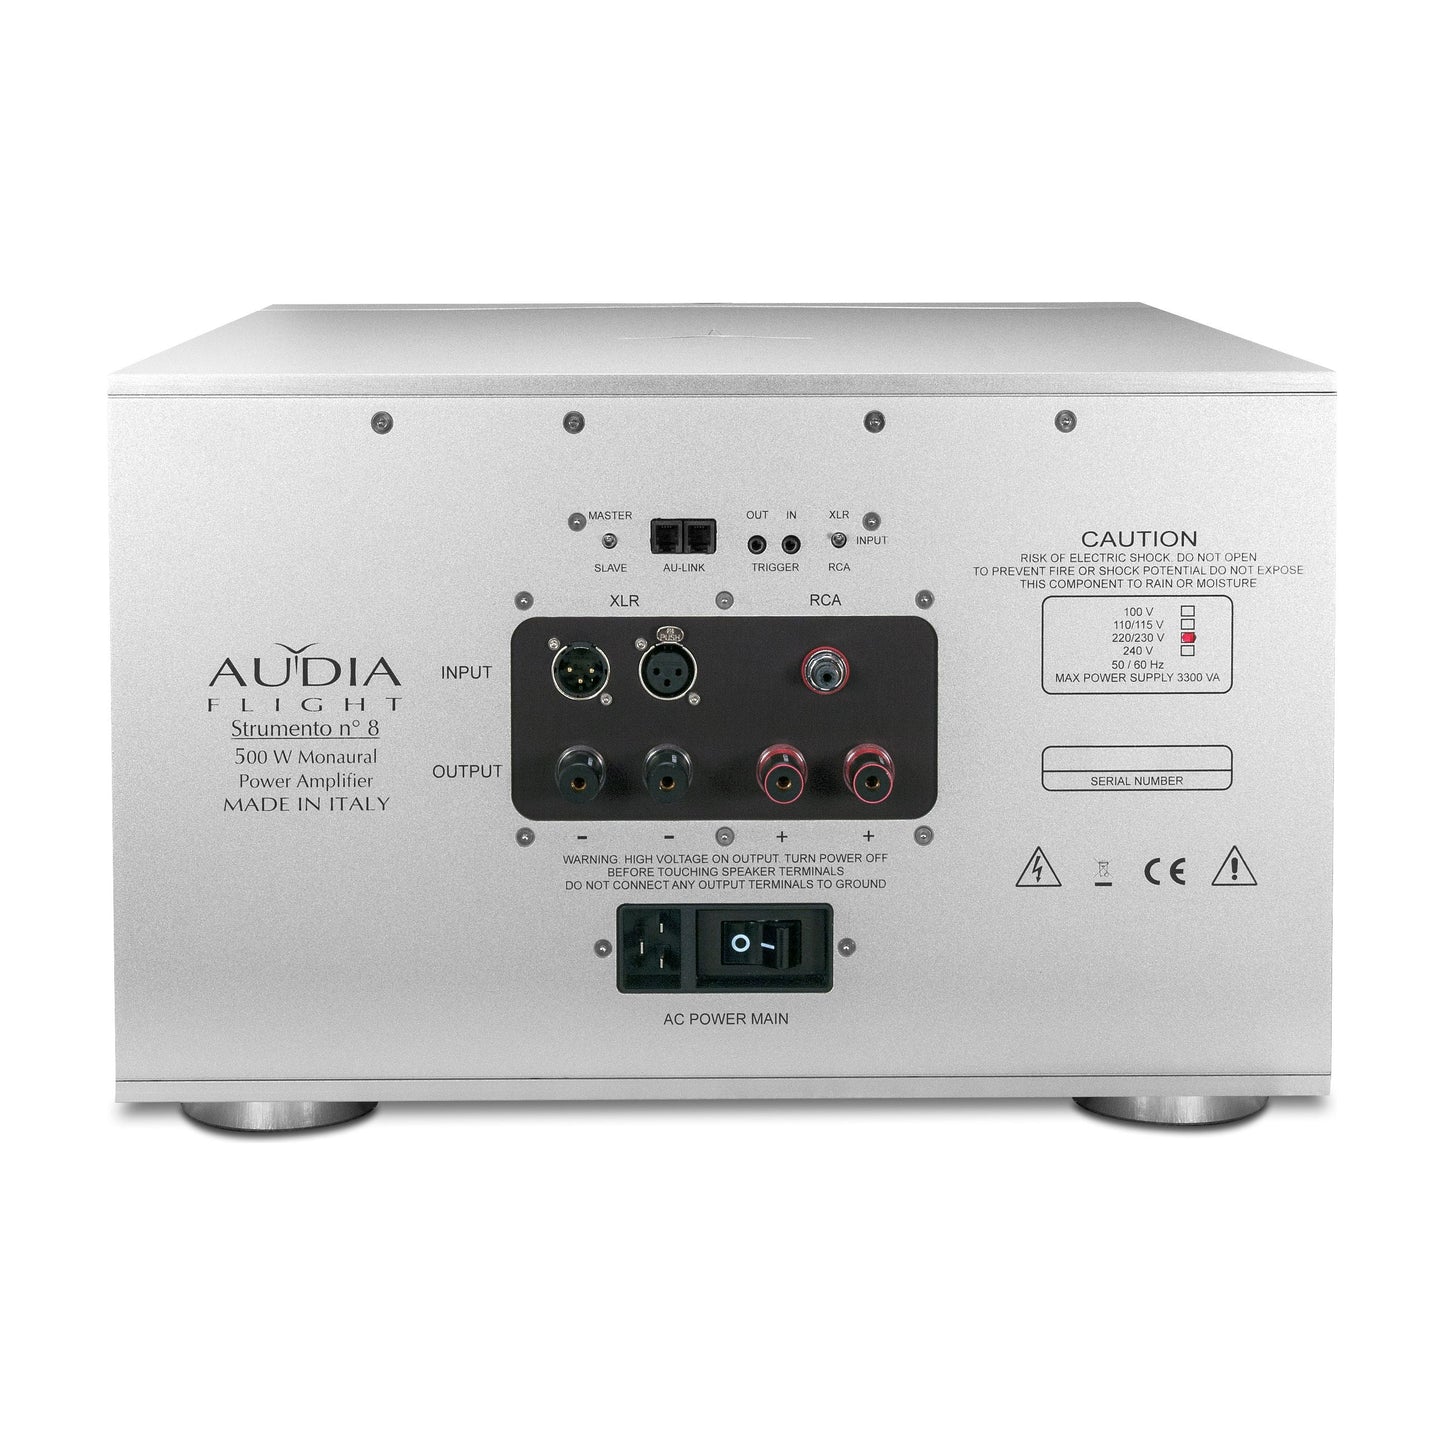 Audia Flight Strumento N° 8 Power Amplifier